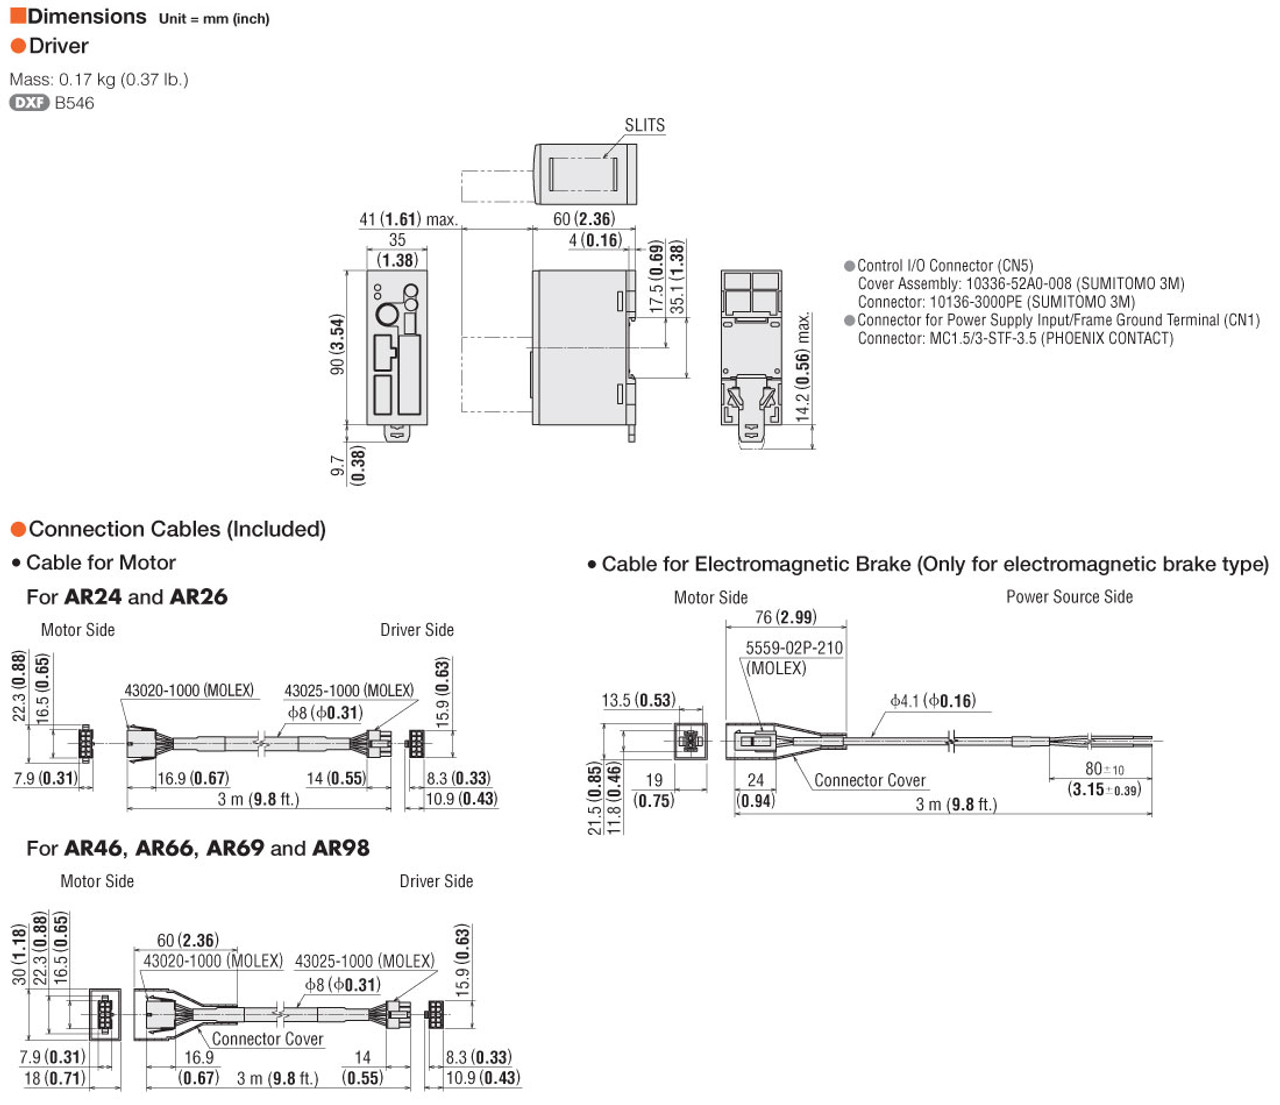 AR46AK-PS50-3 - Dimensions